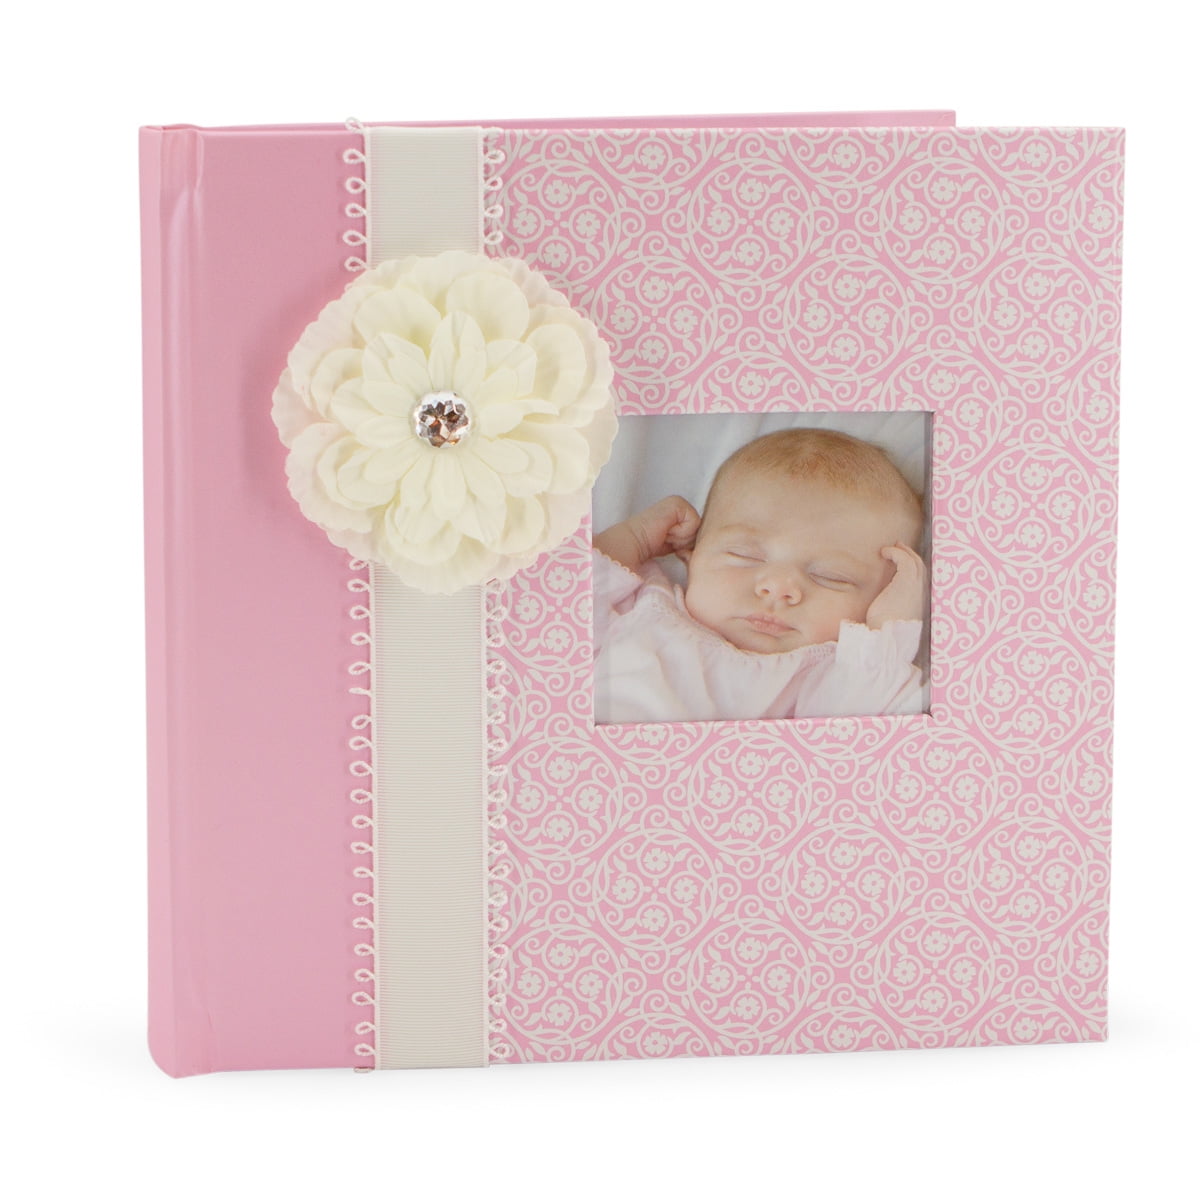 C.R. Gibson Baby Photo Album, Baby Memory Book for Girls, 10.4